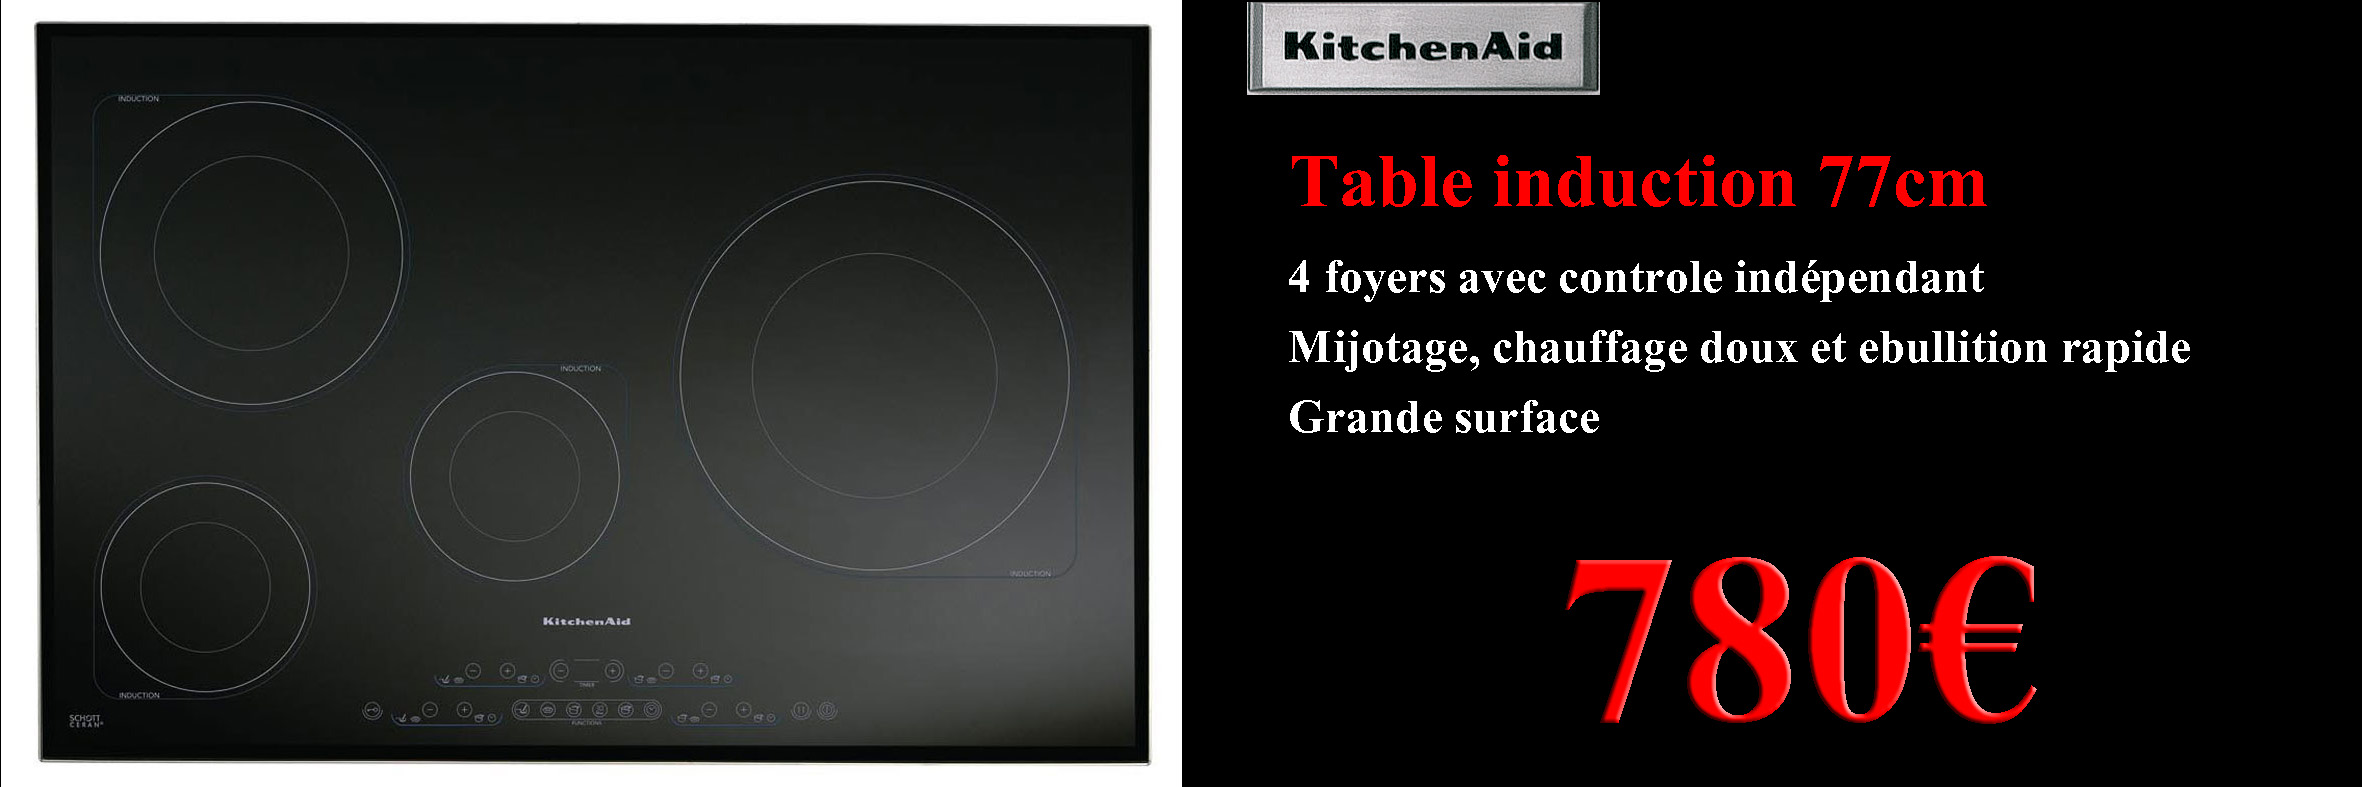 table-induction-kitchenaid-77cm-khit7710.jpg